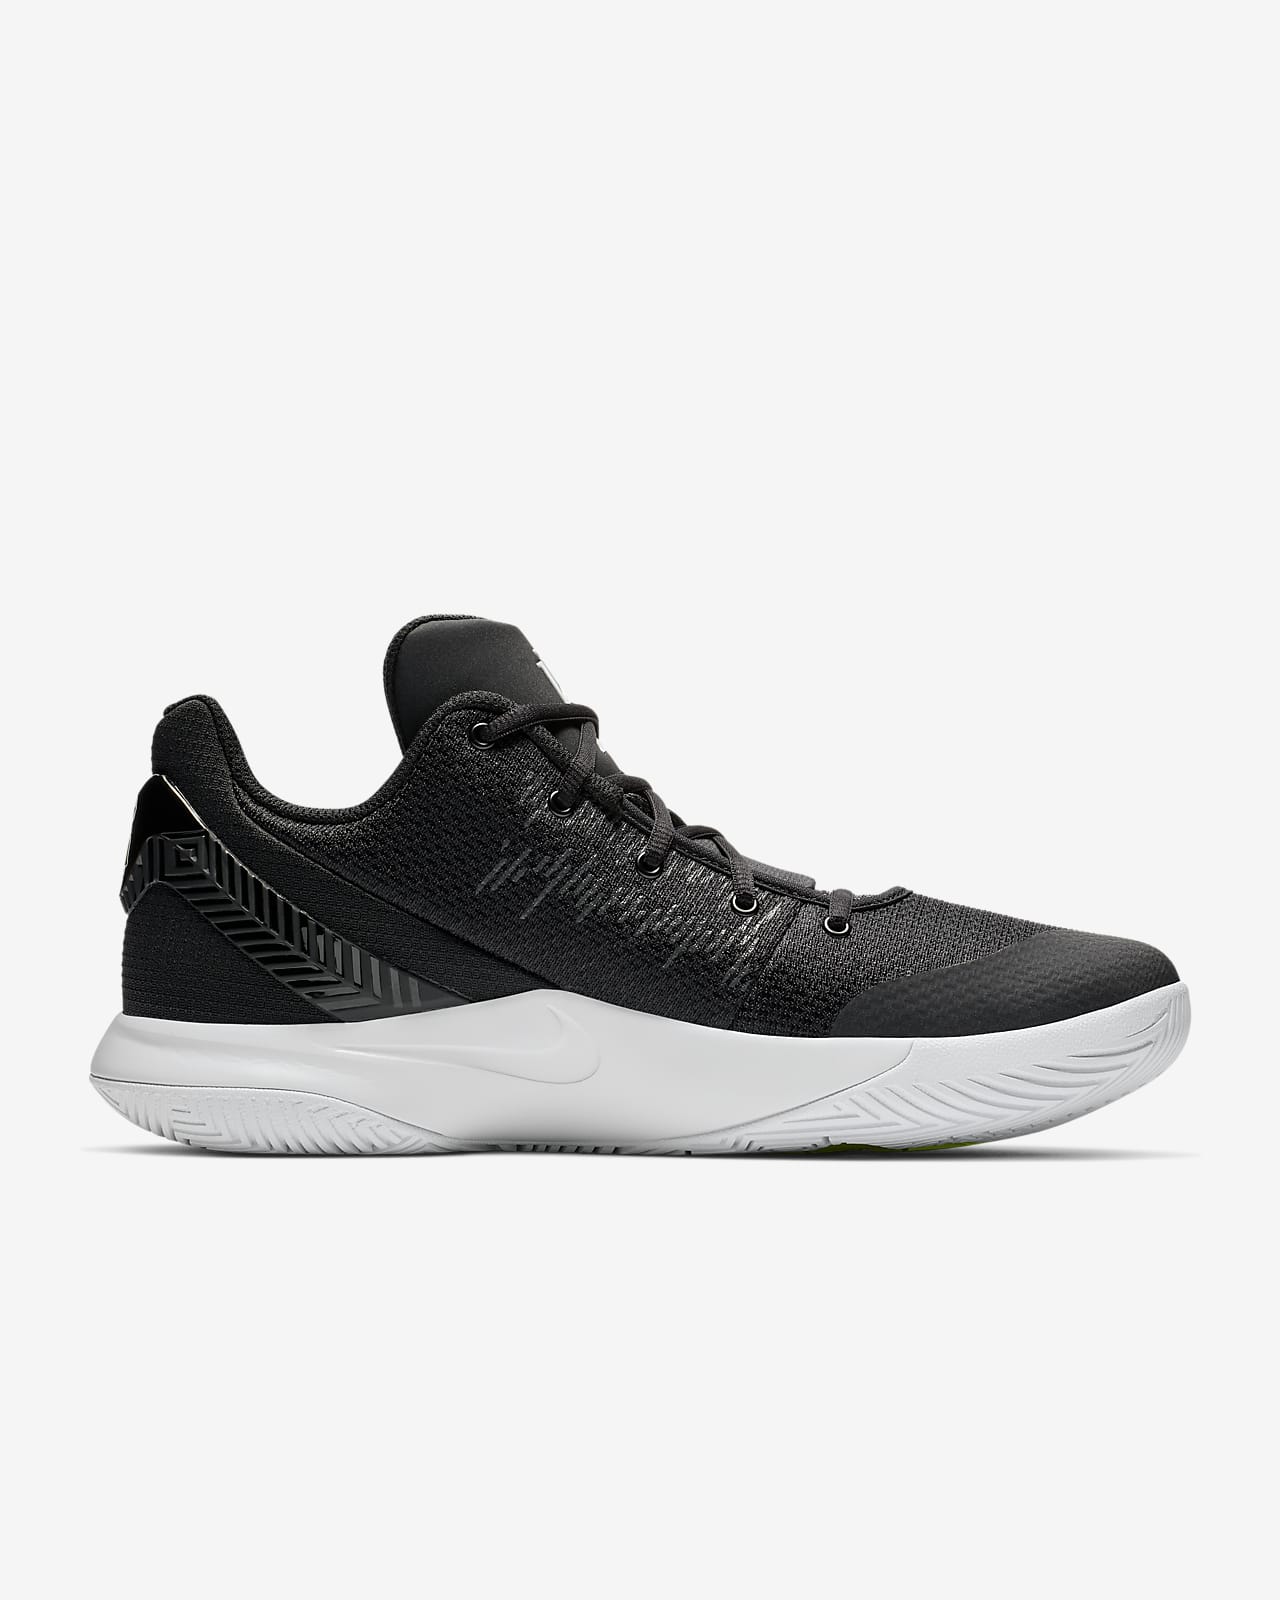 Kyrie Flytrap II EP 籃球鞋。Nike TW